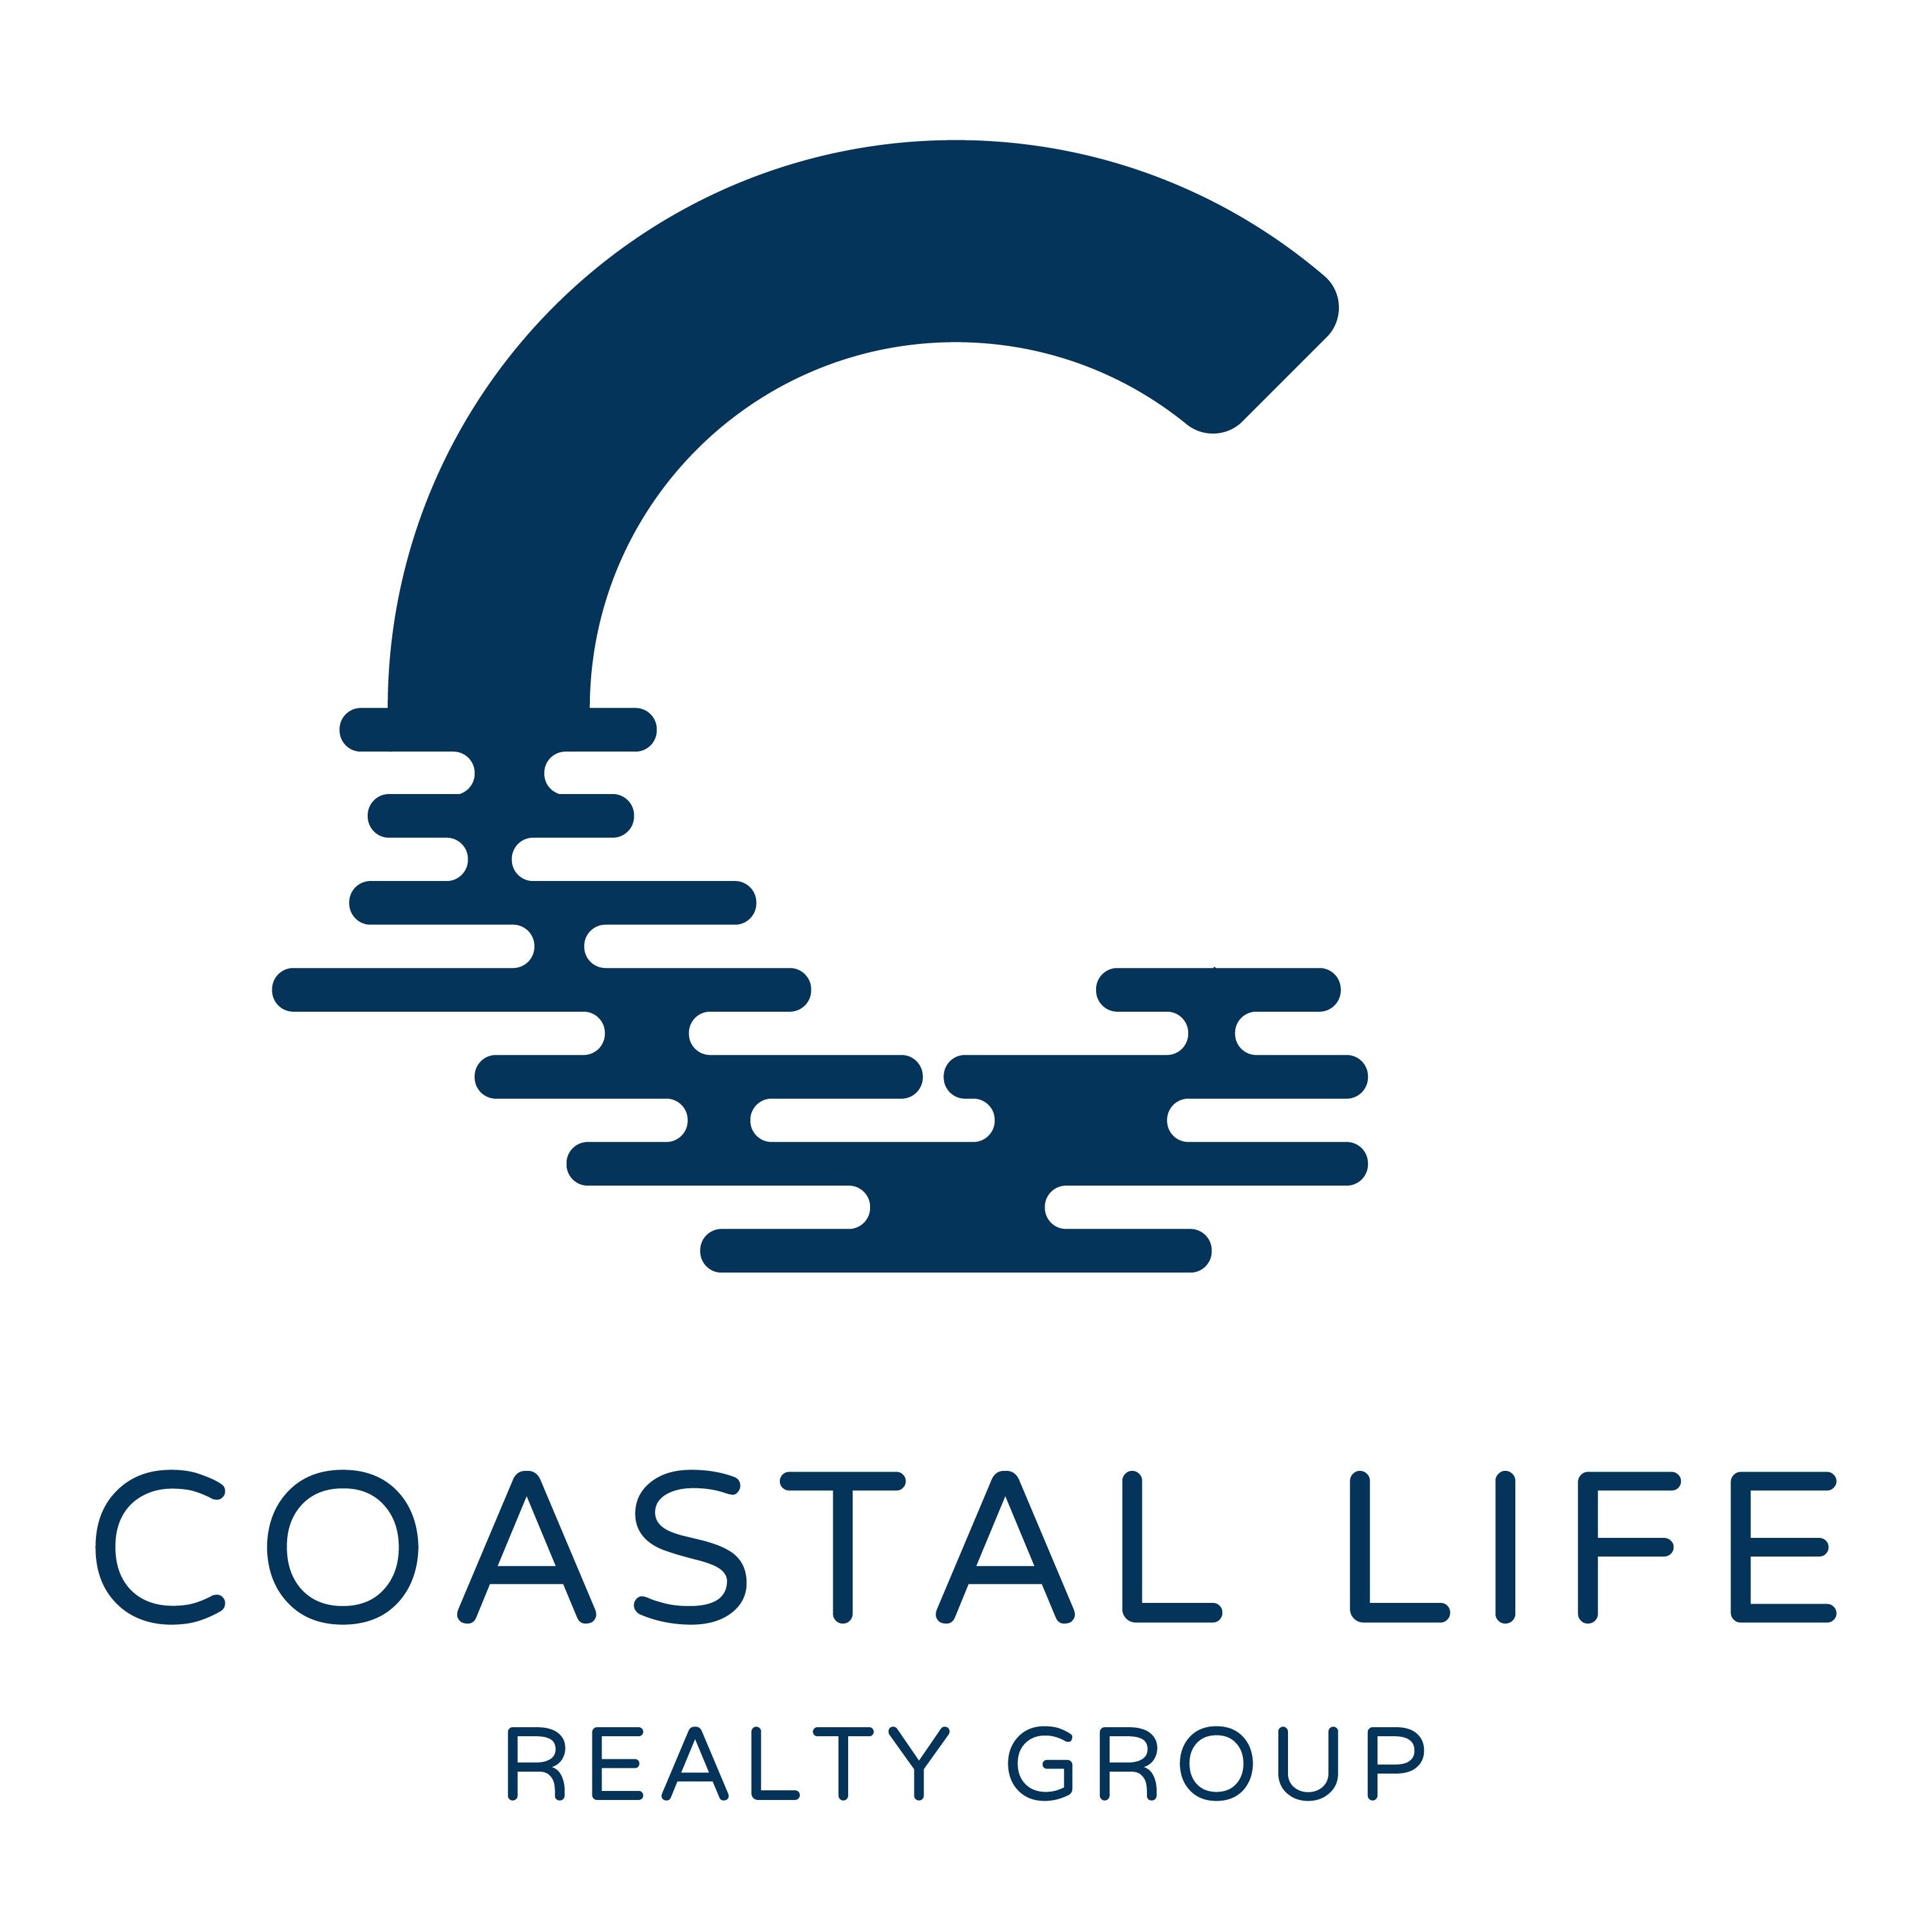 Coastal Life Realty Group